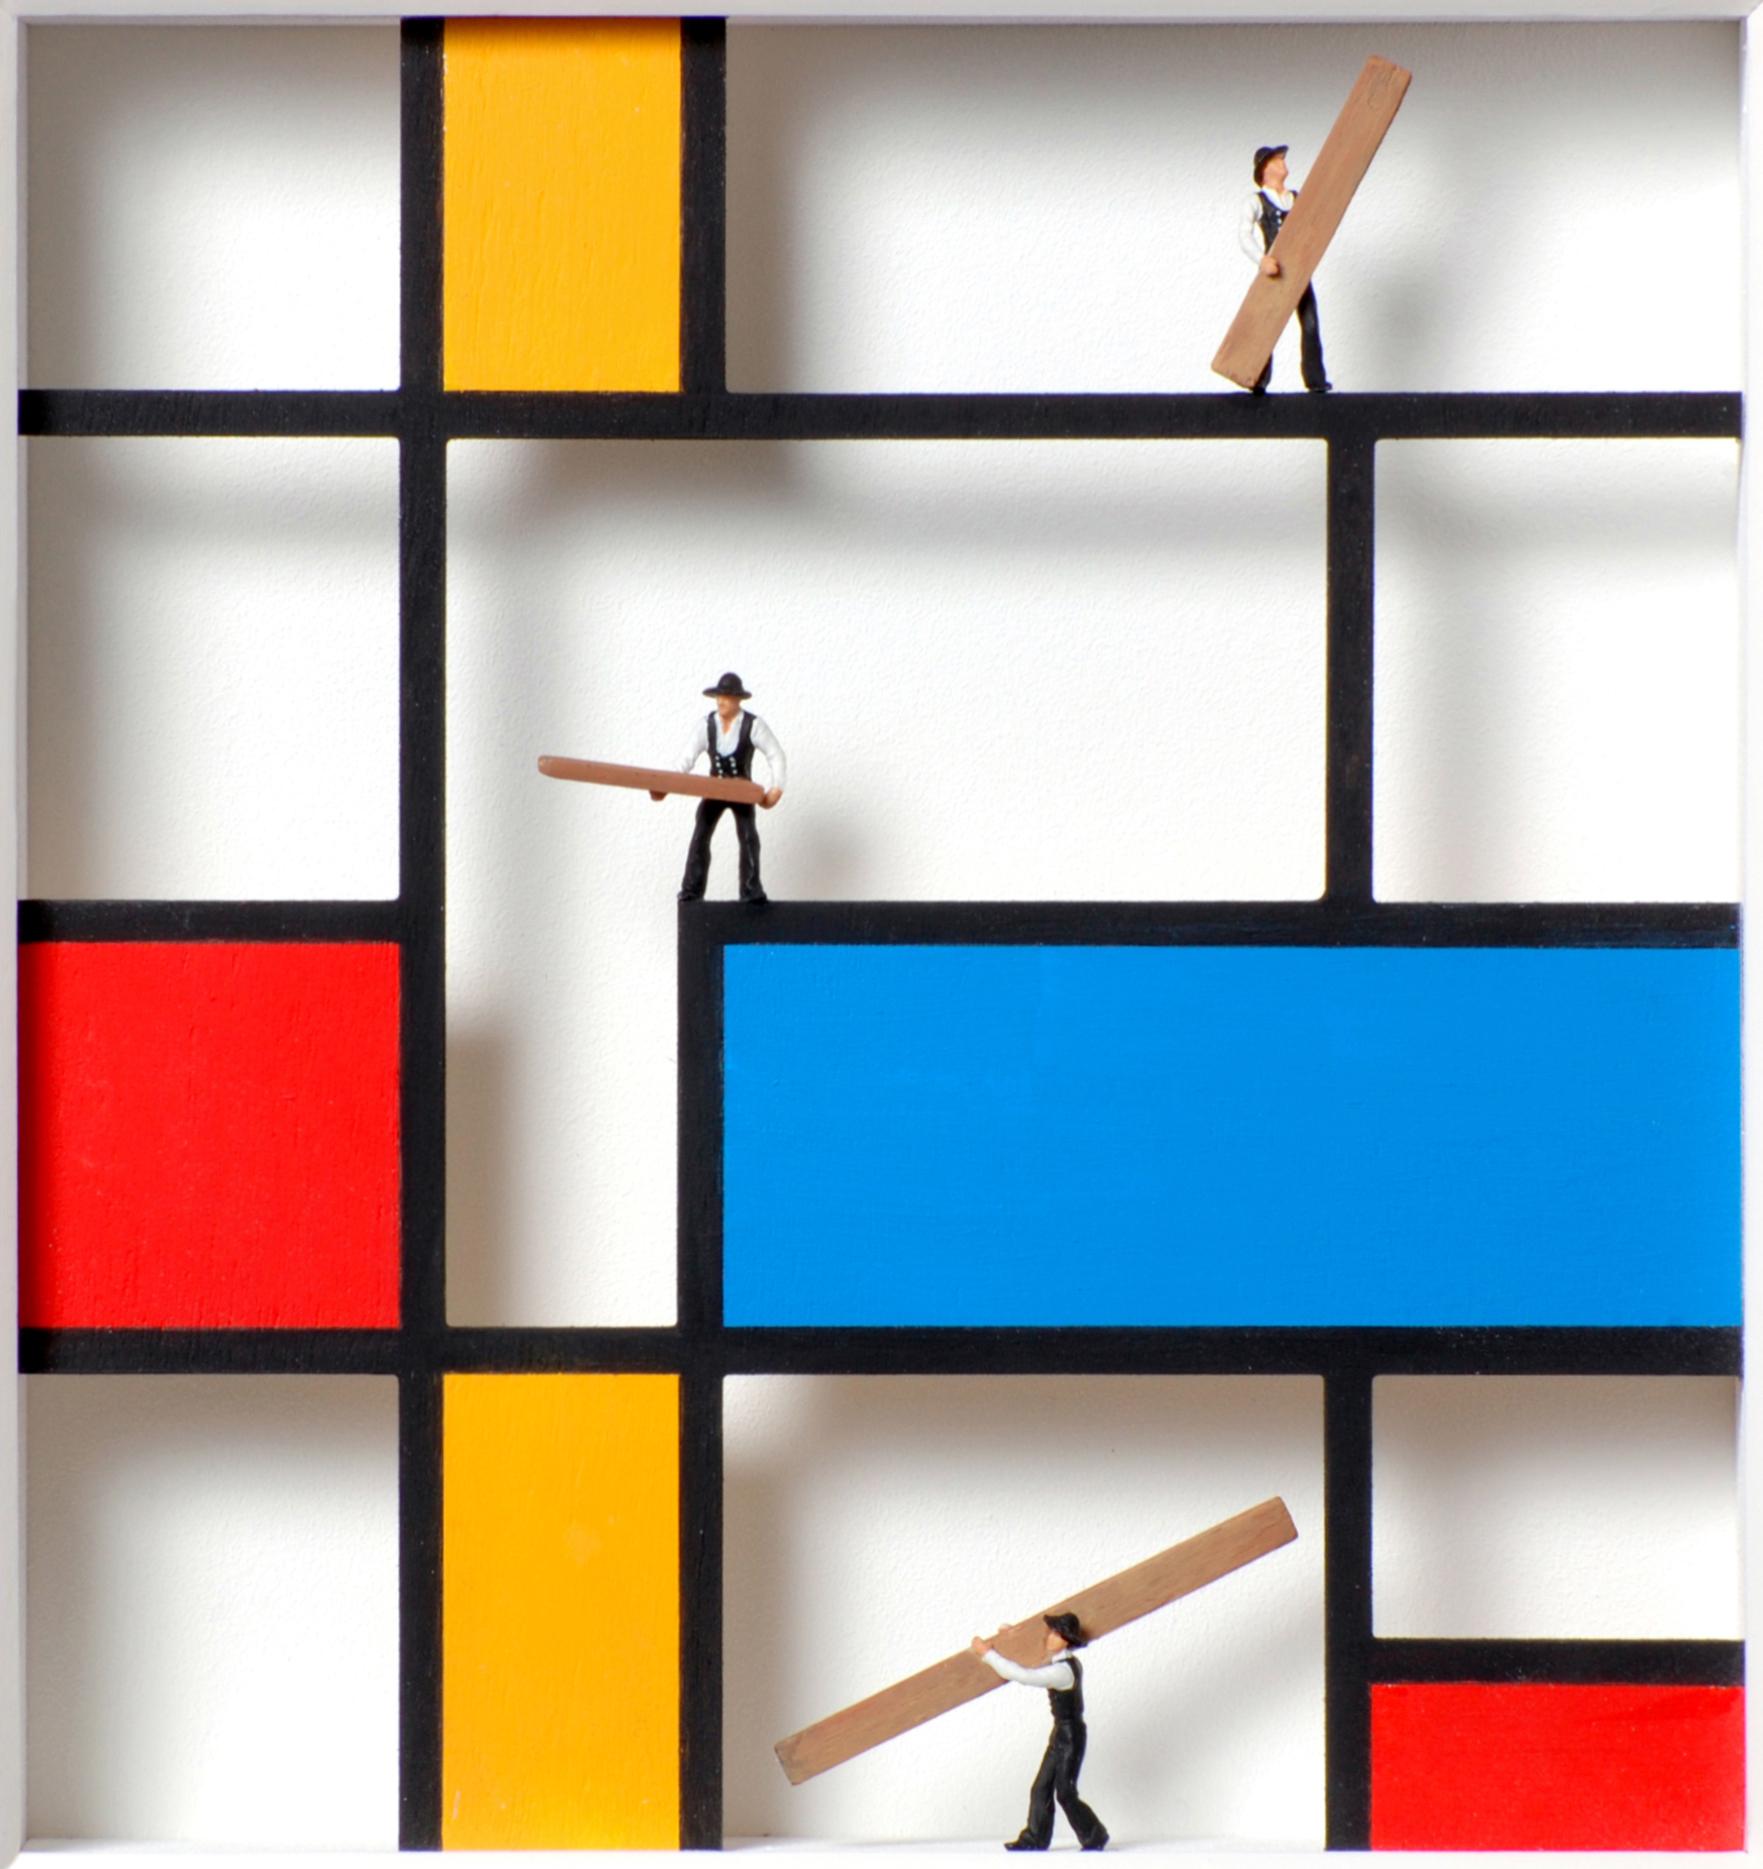 Homage to Mondrian- Work in Progress - art work, design tribute to Dutch master - Mixed Media Art by Volker Kuhn